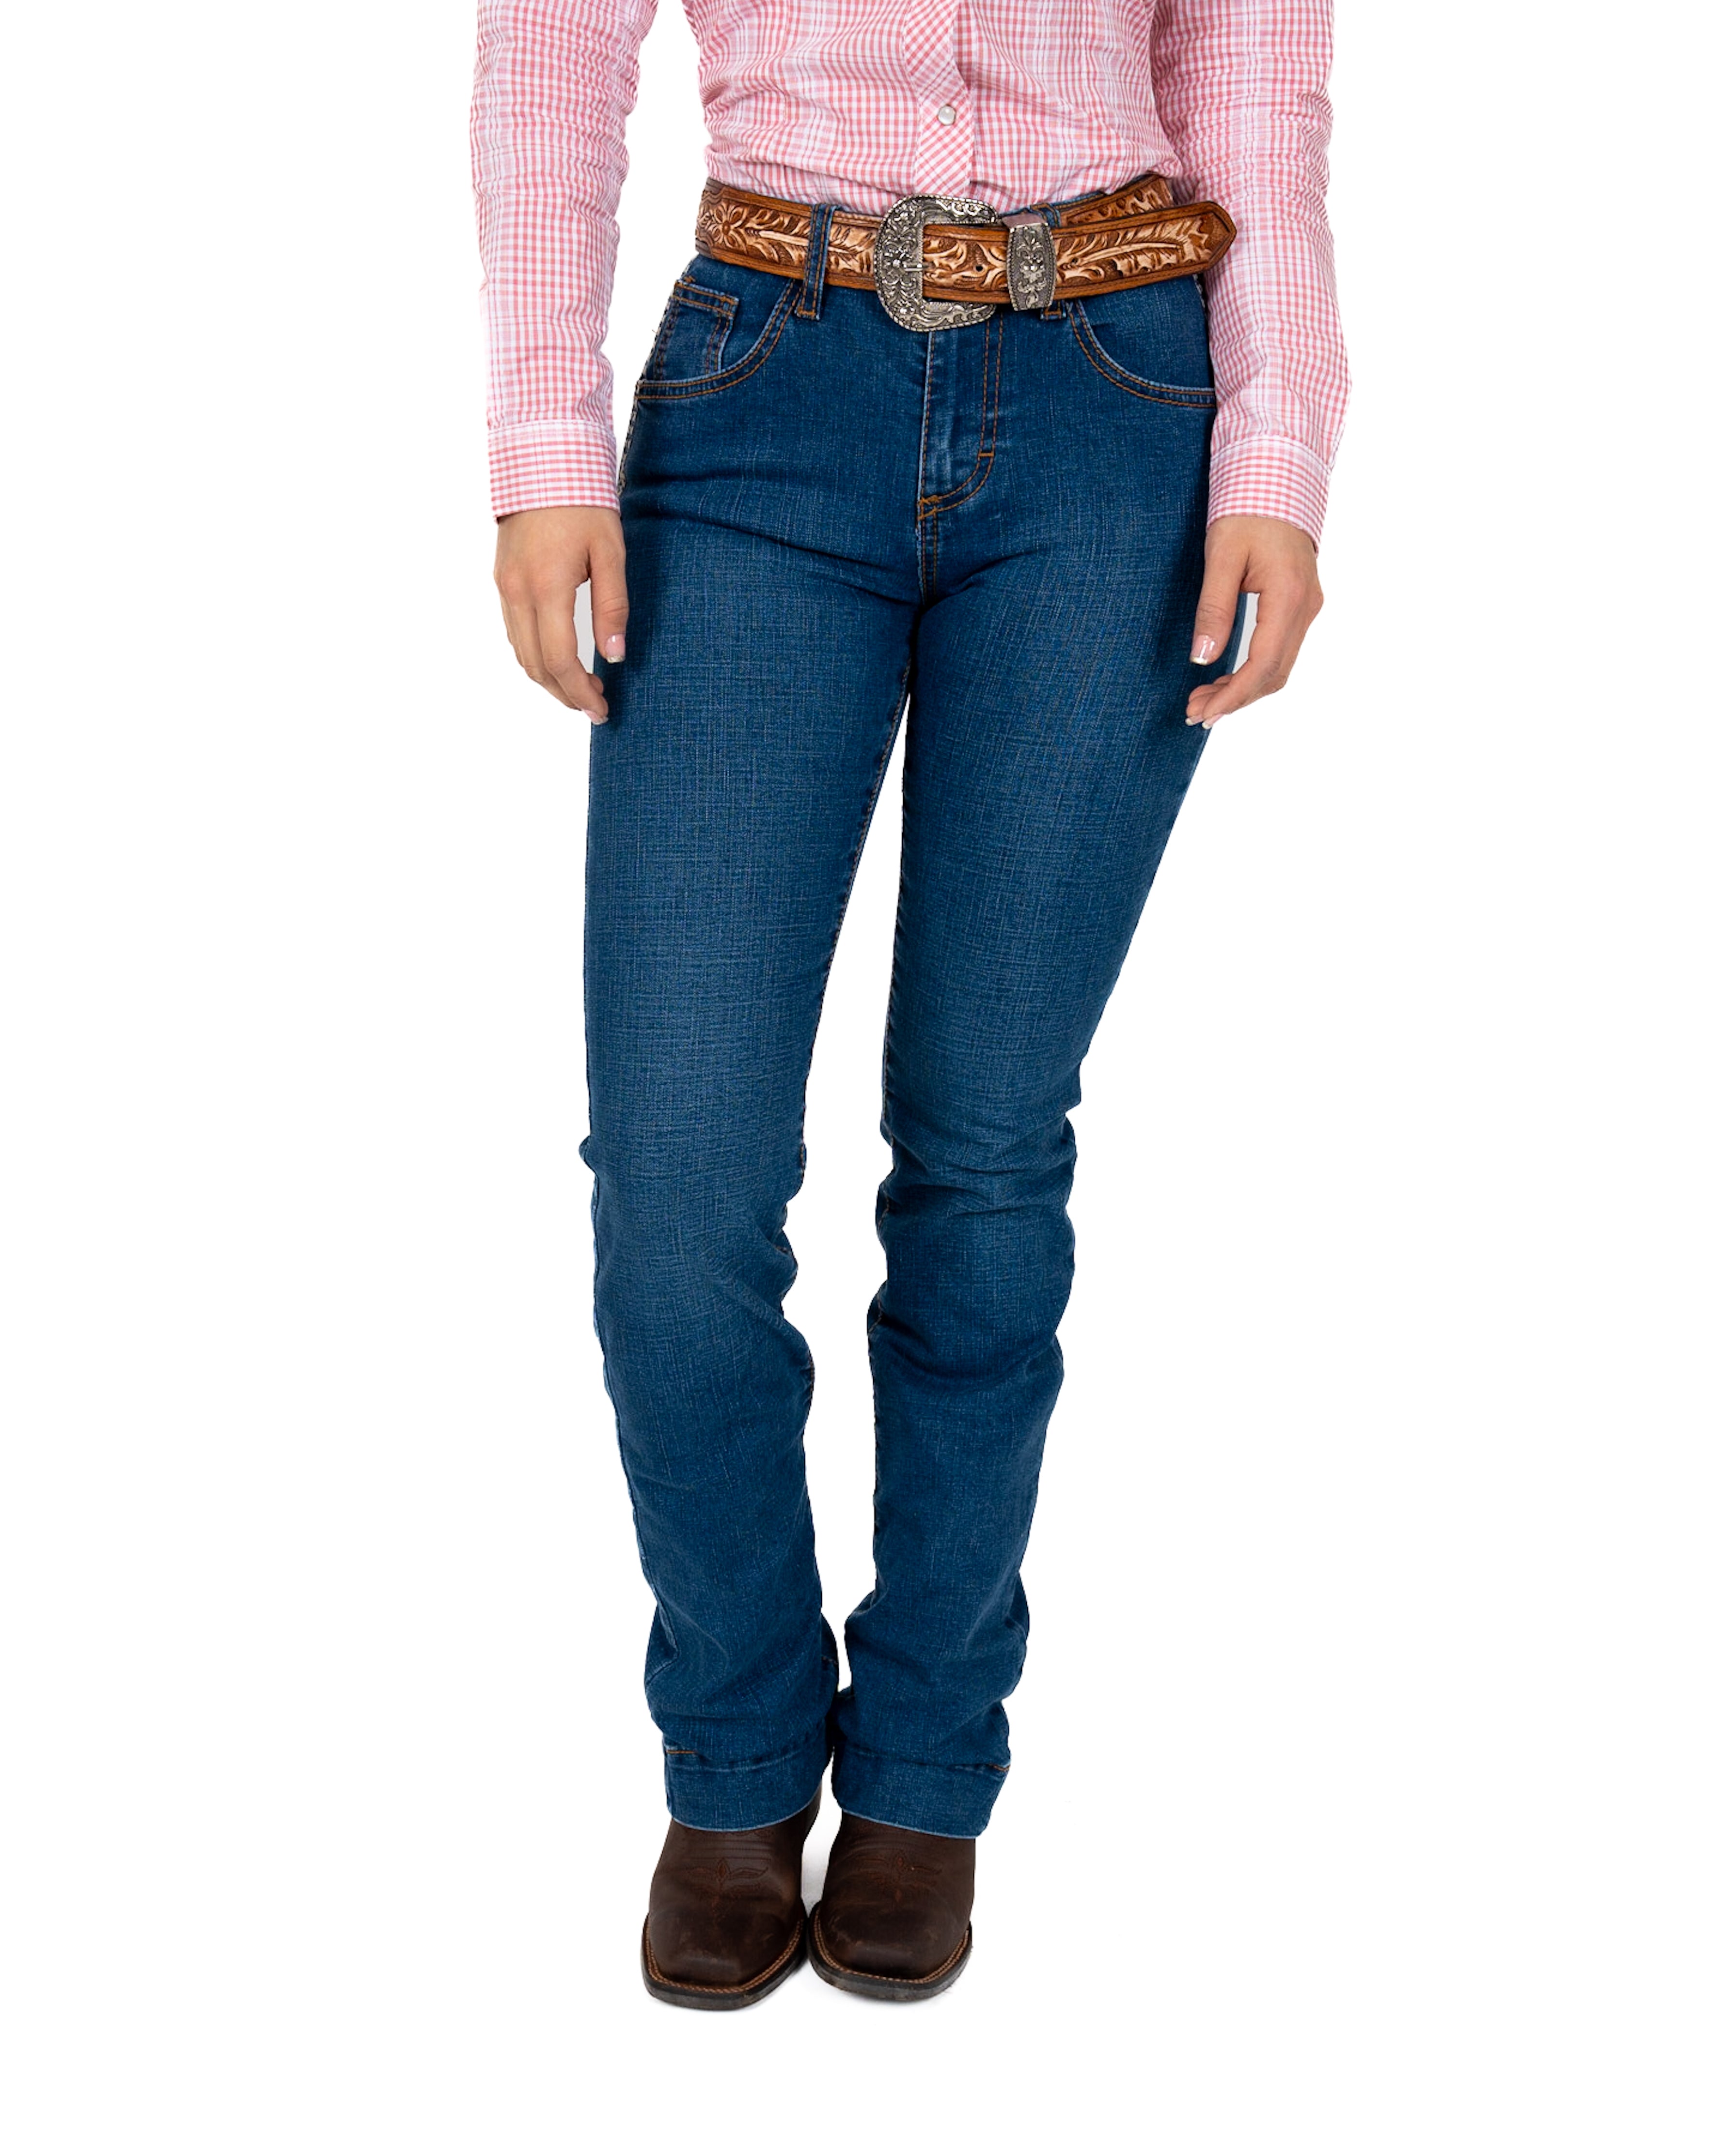 Jeans Wrangler High Rise Cintura Alta Corte Bota Dama